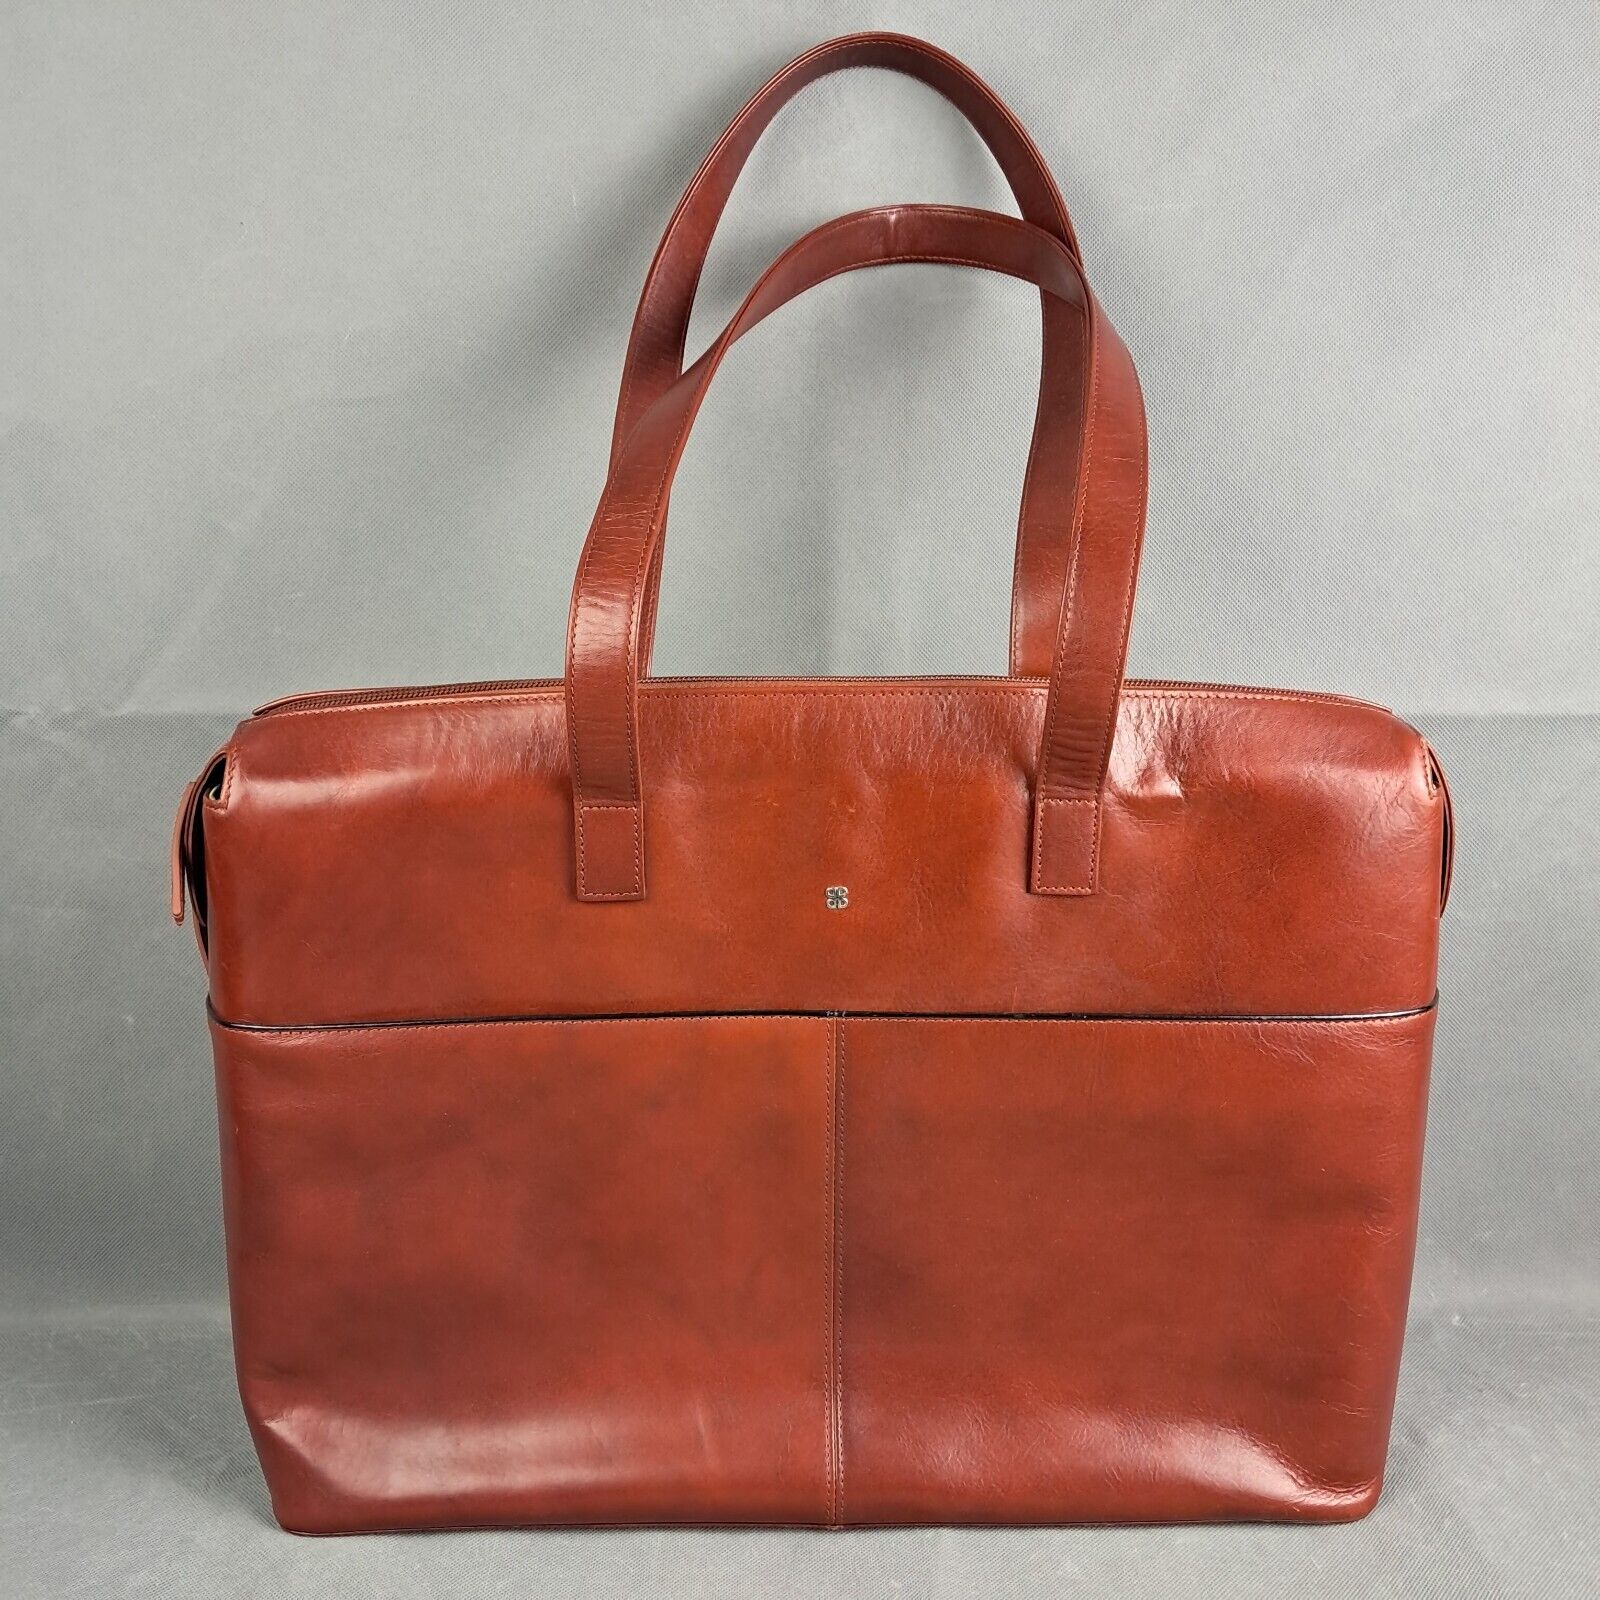 Bosca Genuine Leather Briefcase Vintage Laptop Messenger Bag Light Brown 18x12x5